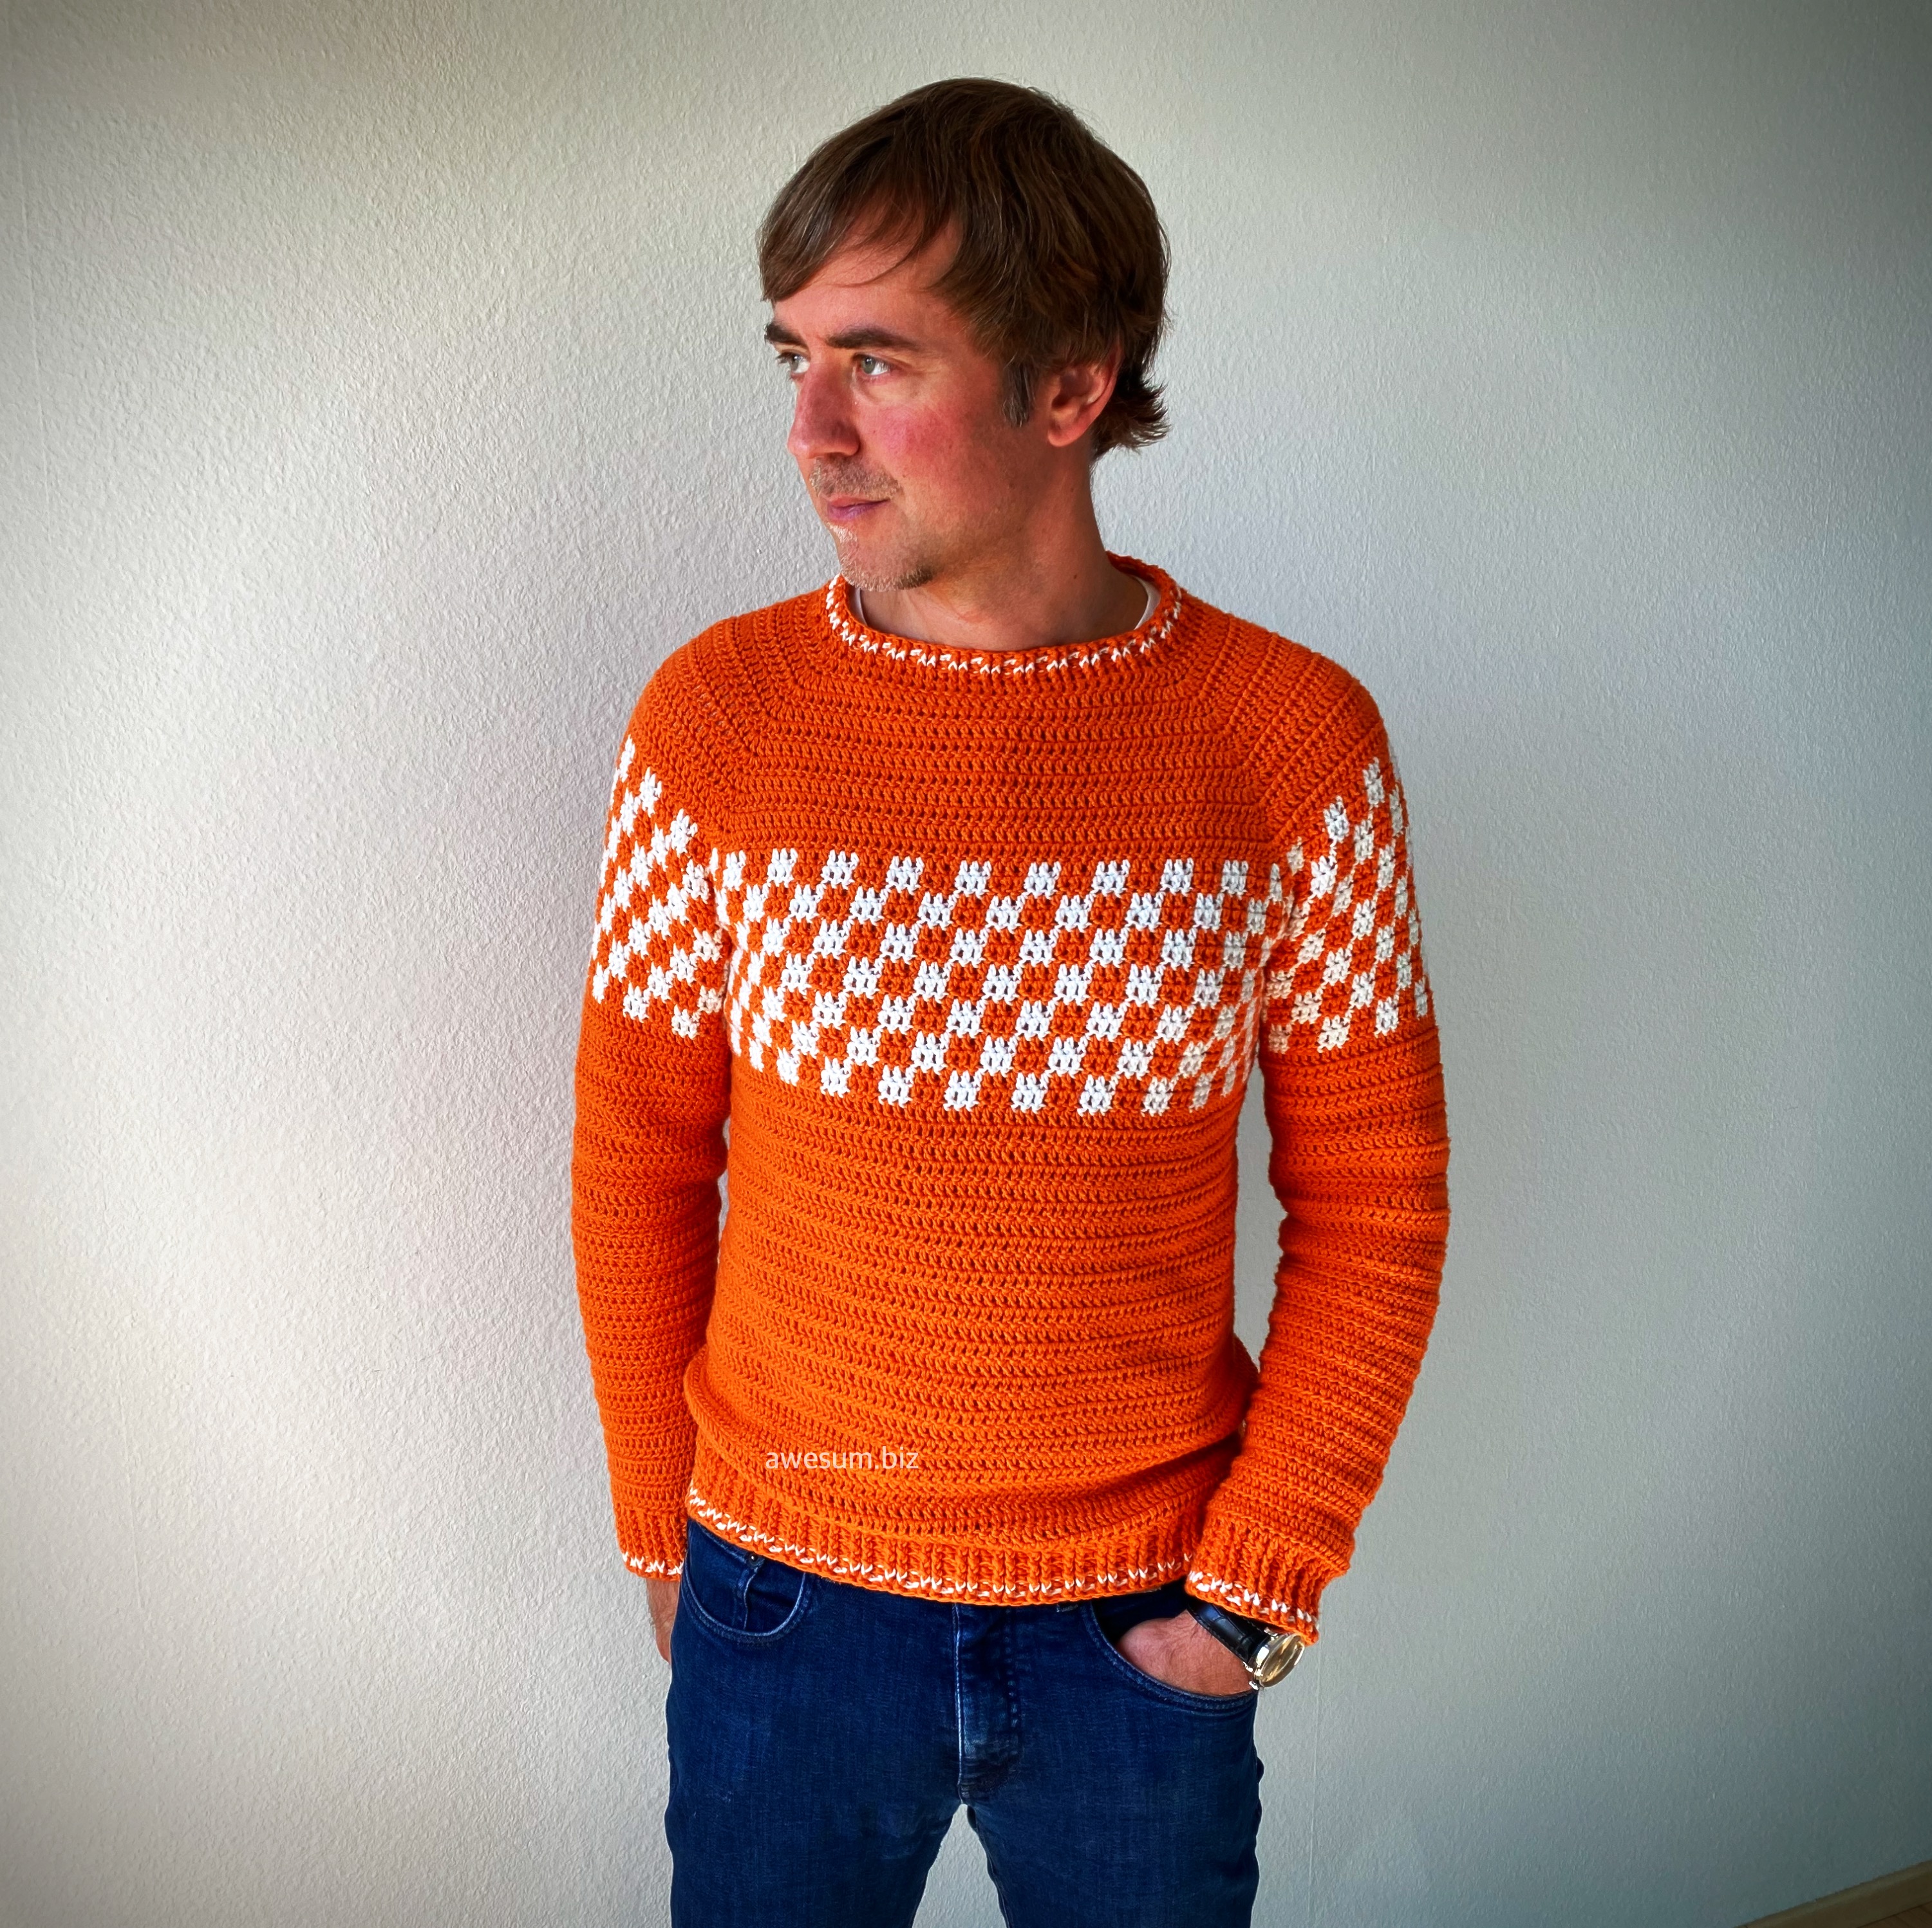 awesum crochet orange men's crochet jersey white checkered makes you a dressman